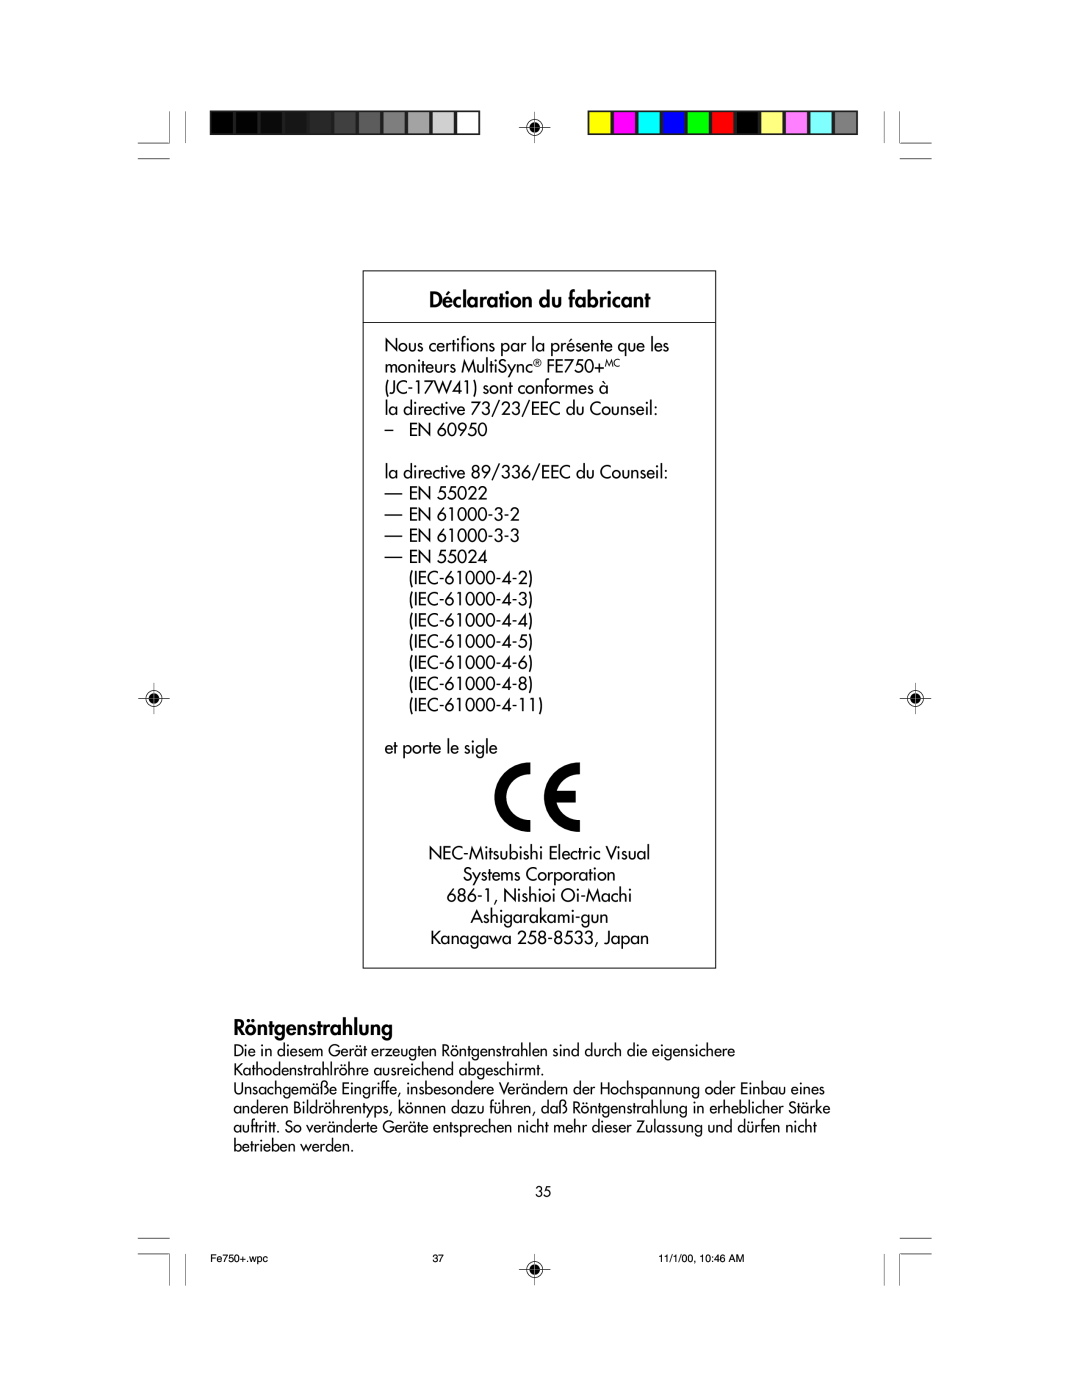 NEC FE750 Plus user manual Déclaration du fabricant, Röntgenstrahlung 